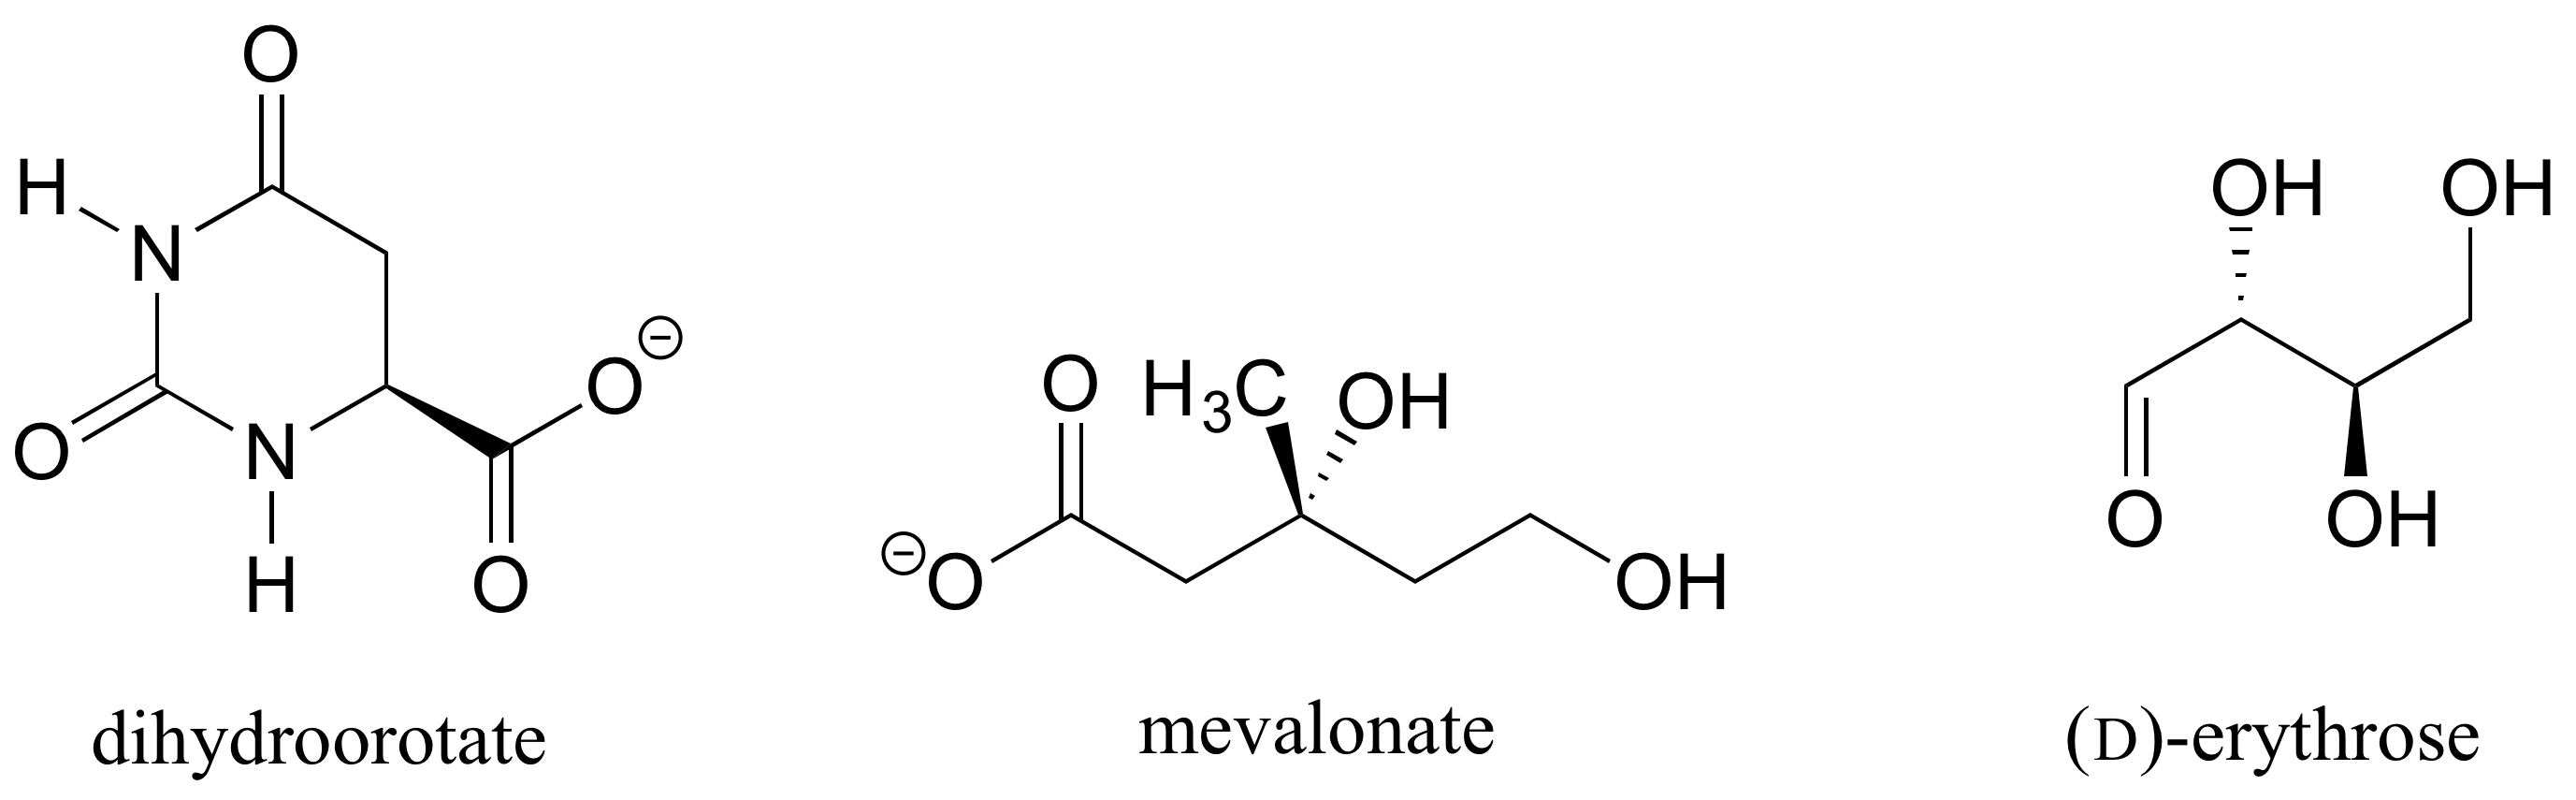 De izquierda a derecha: molécula de dihidroorotato, molécula de mevalonato, molécula (D) -eritrosa.